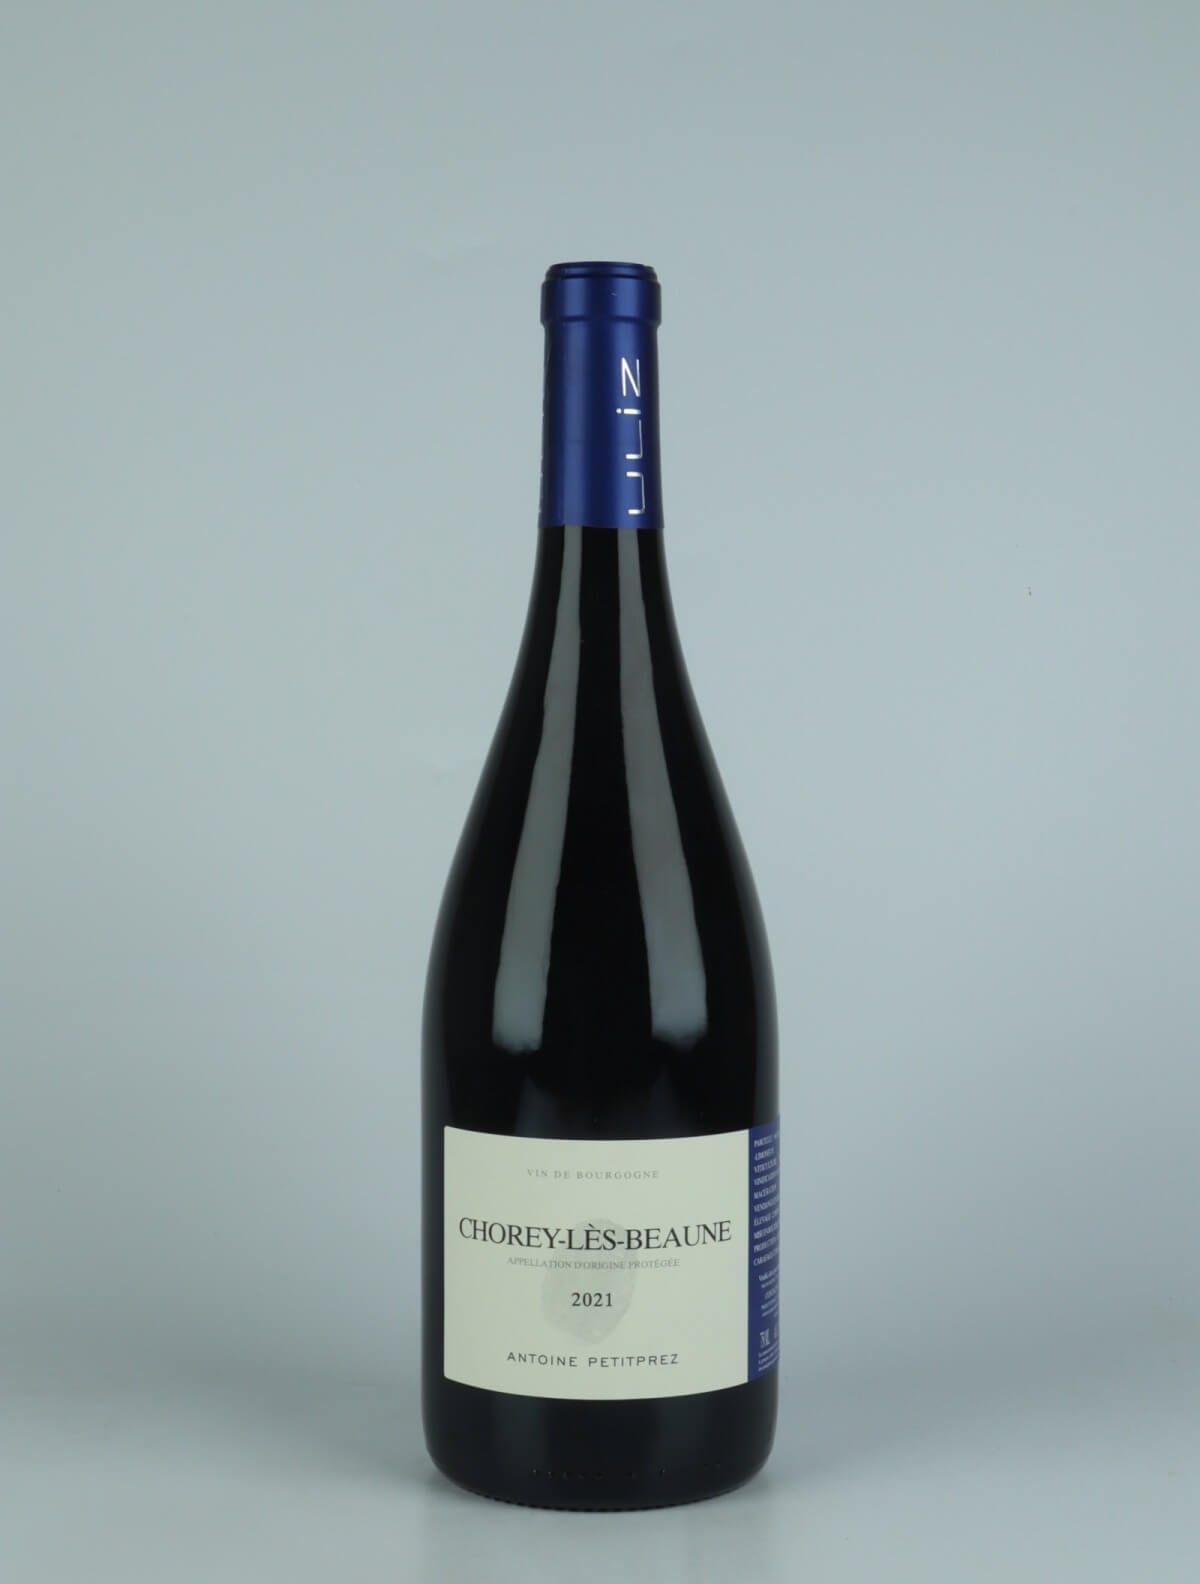 En flaske 2021 Chorey-les-Beaune Rødvin fra Antoine Petitprez, Bourgogne i Frankrig